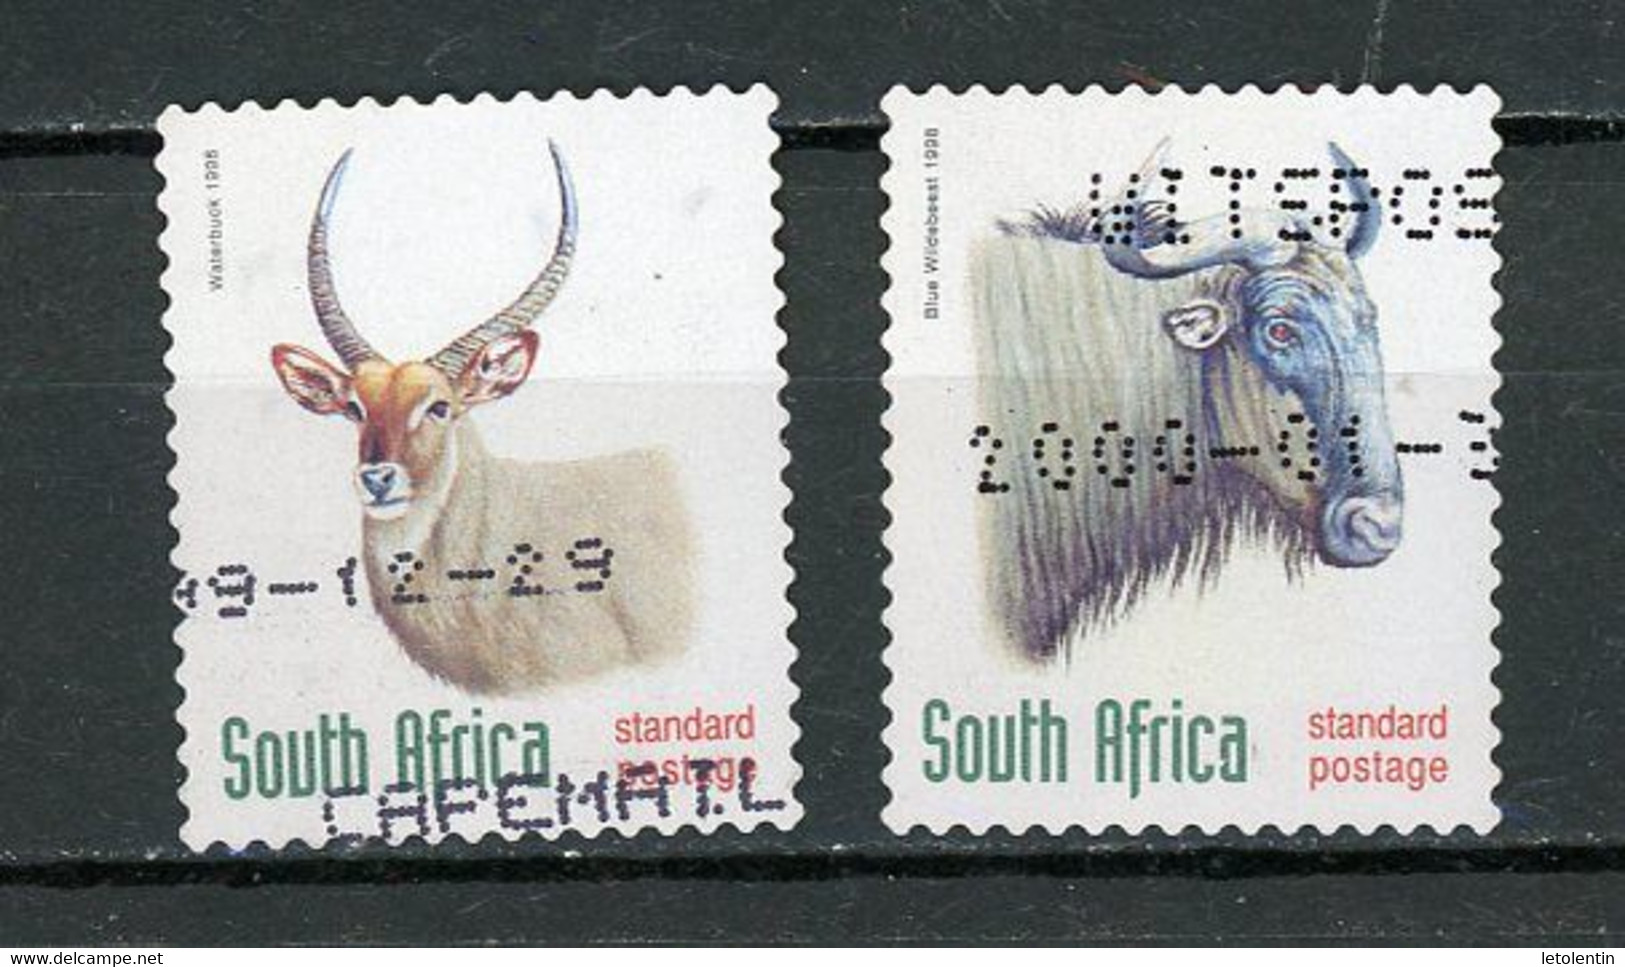 AFRIQUE DU SUD : FAUNE (GAZELLE) - N° Yvert 1031a+1032a Dent 13 & Barres De Pho En L - Used Stamps